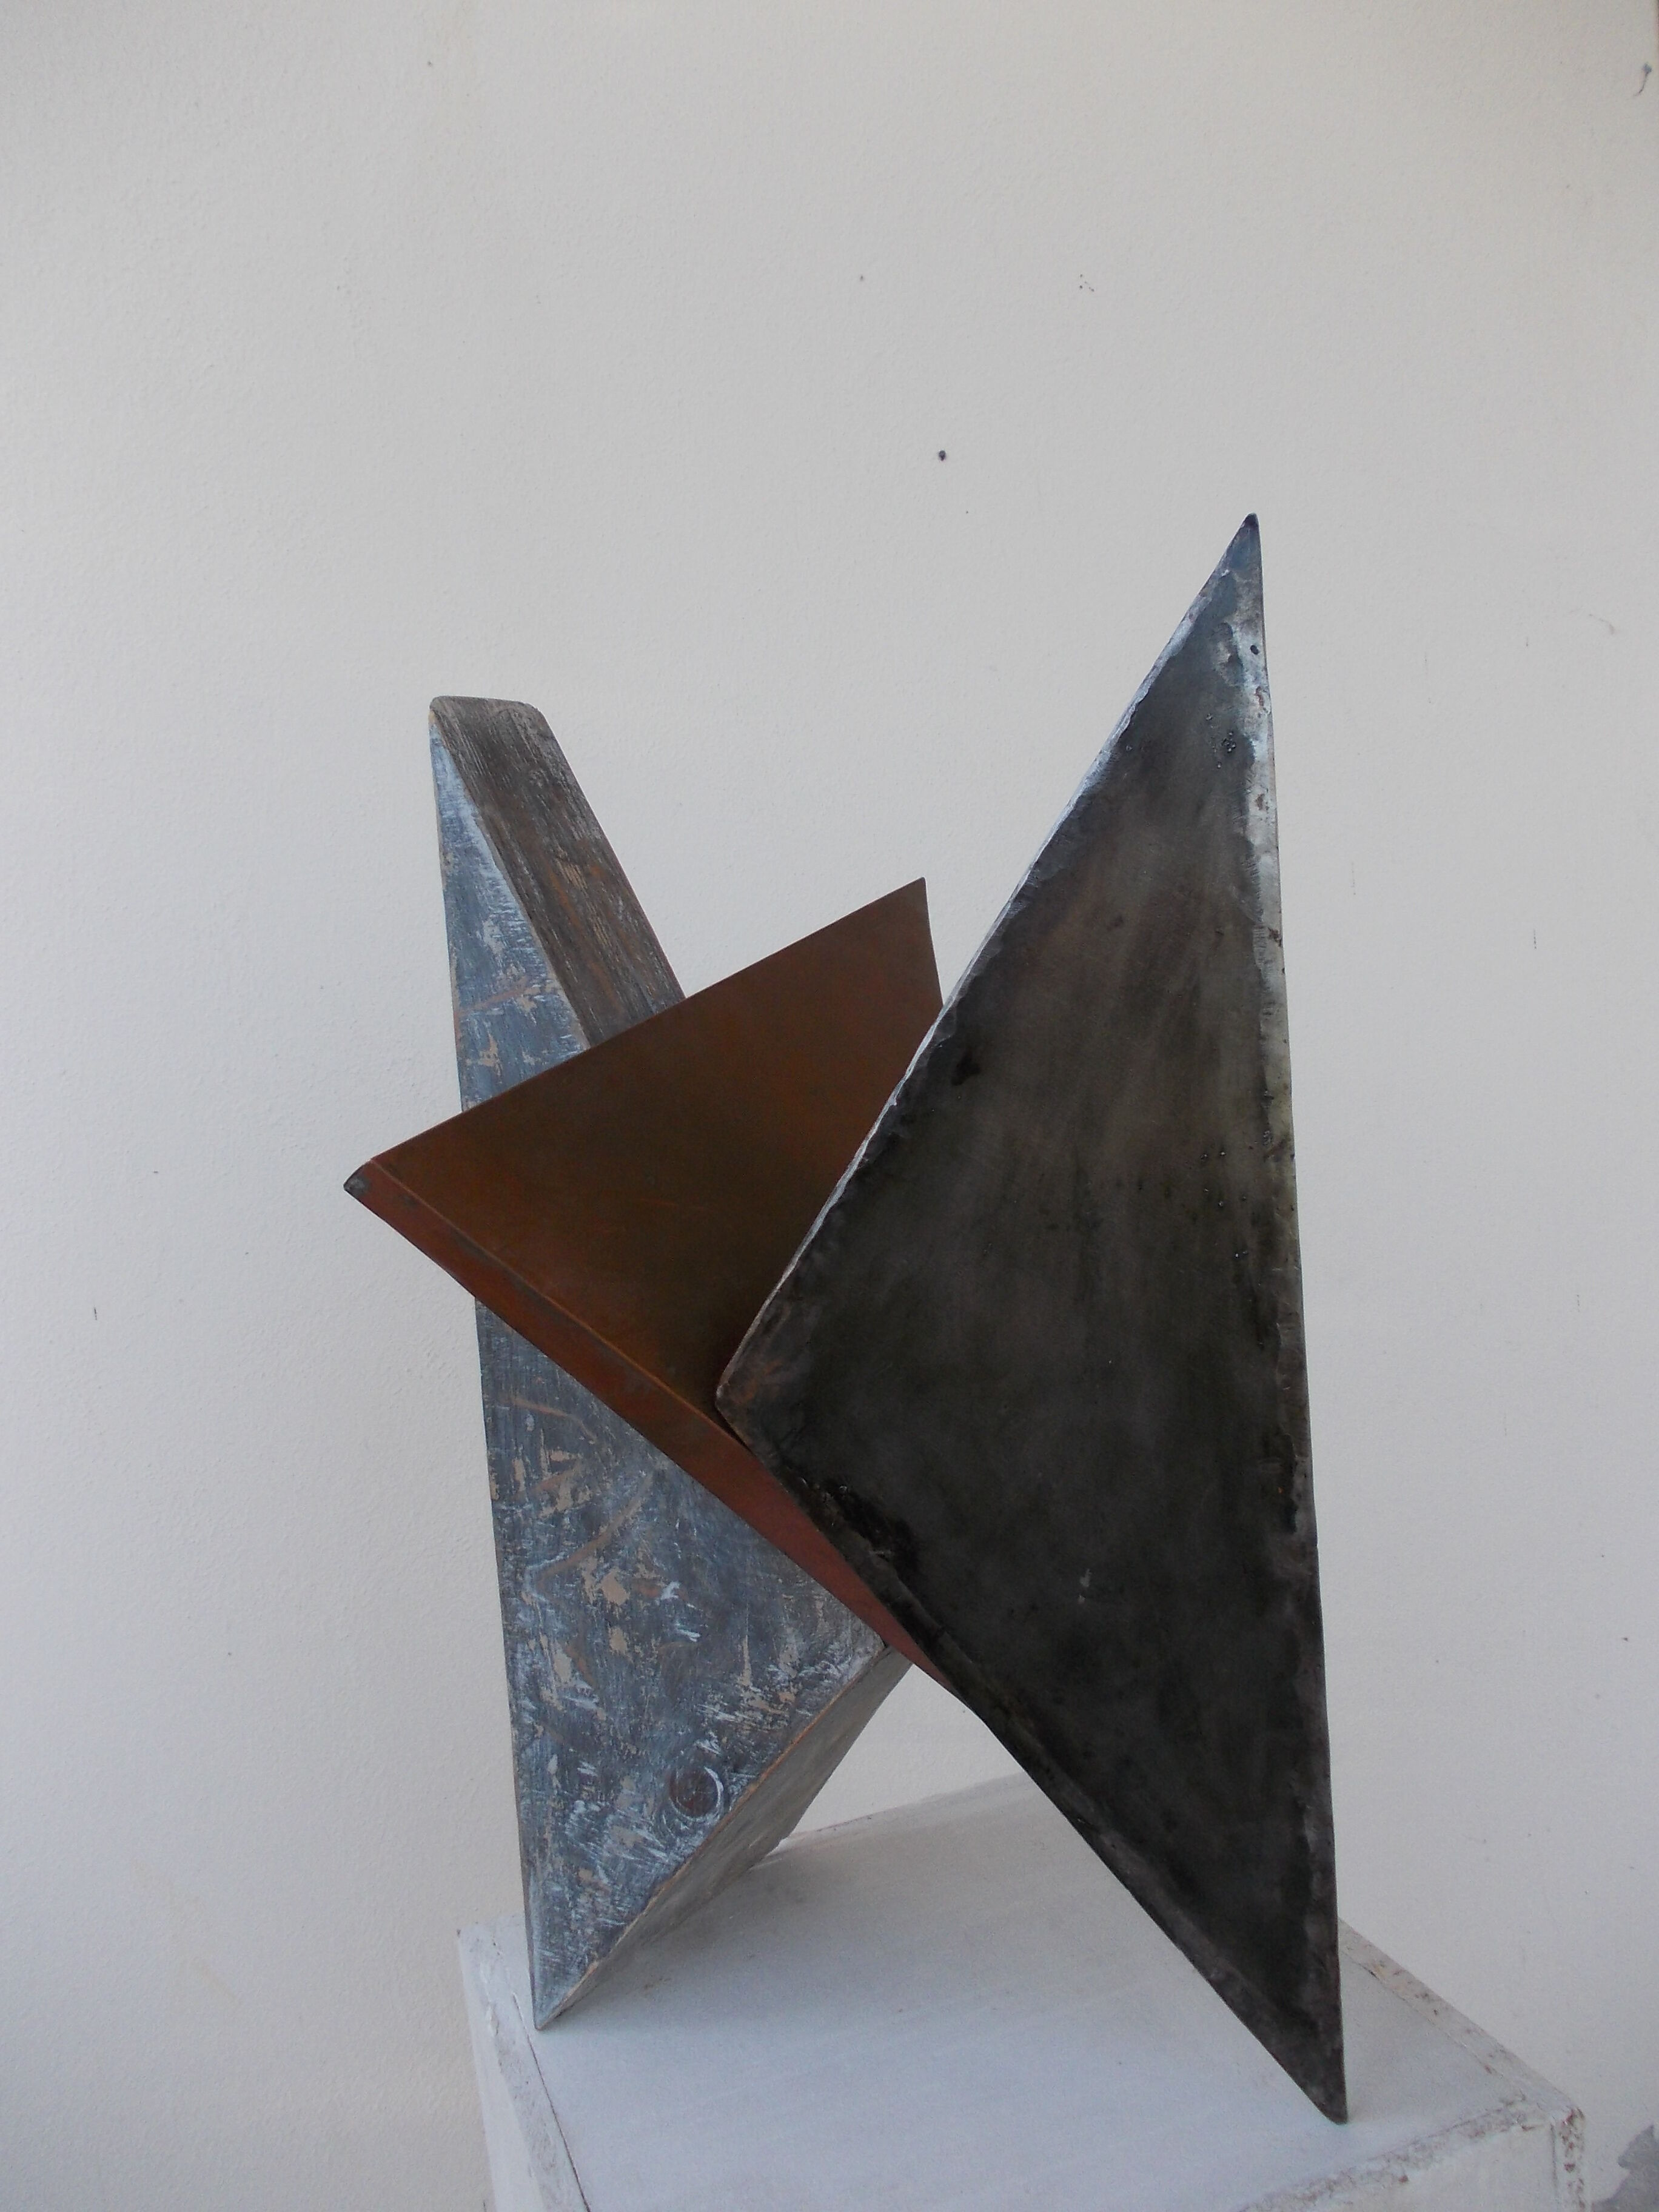 Sculpture "Triad" (1997)